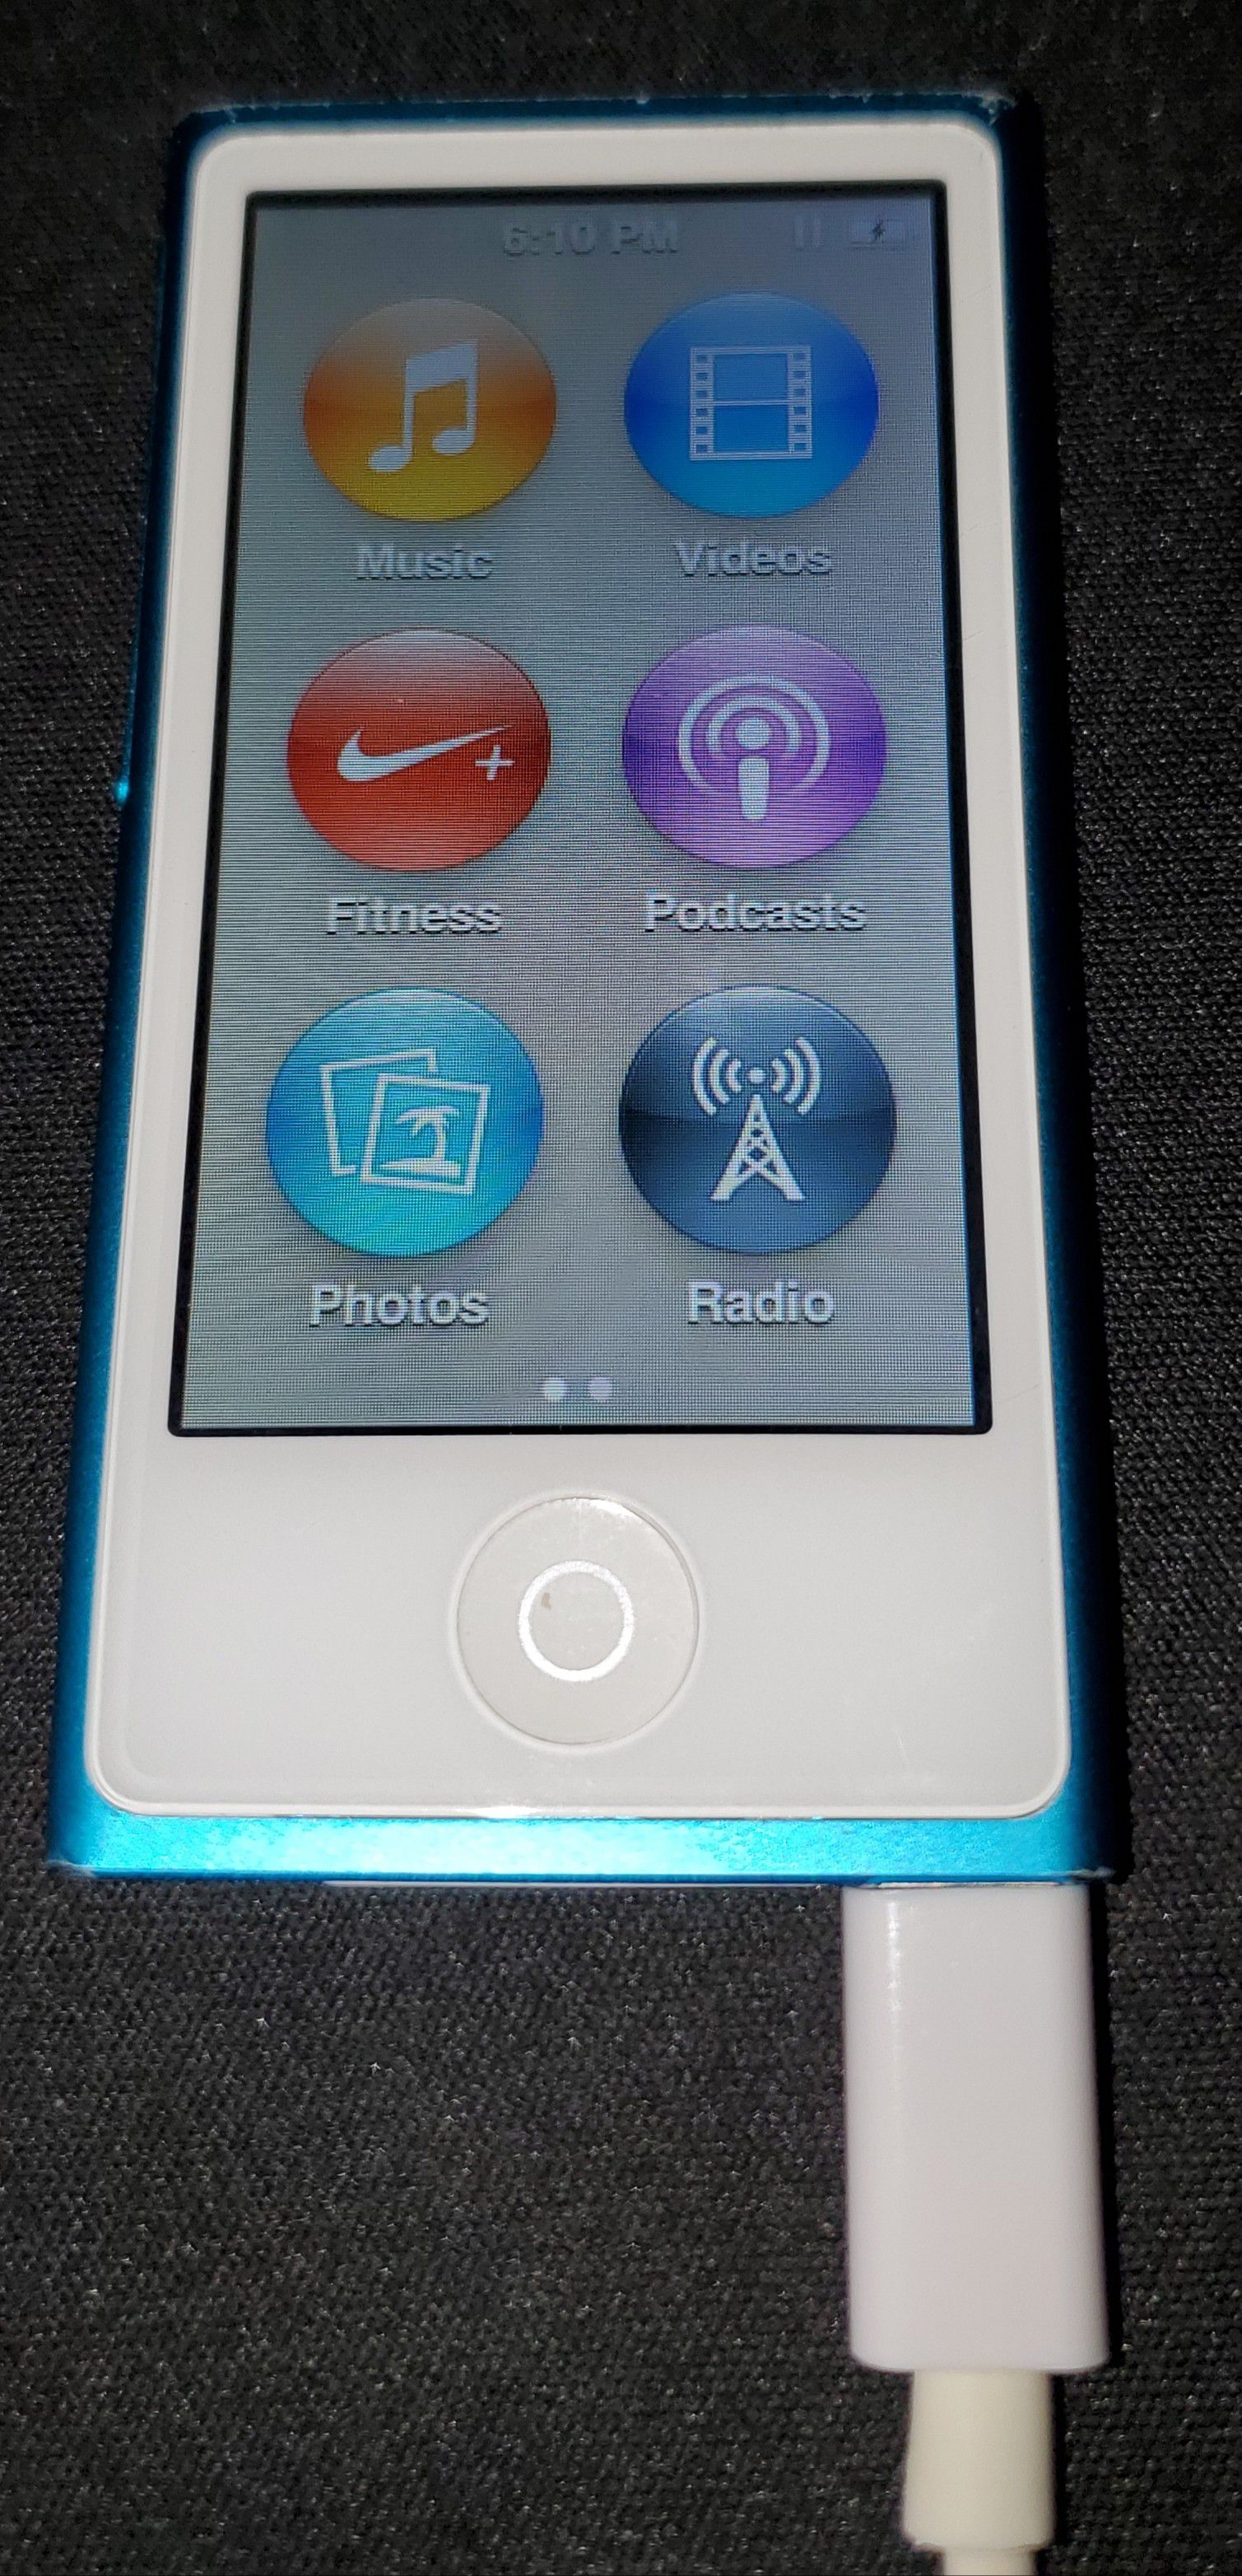 iPod Nano 7th Generation